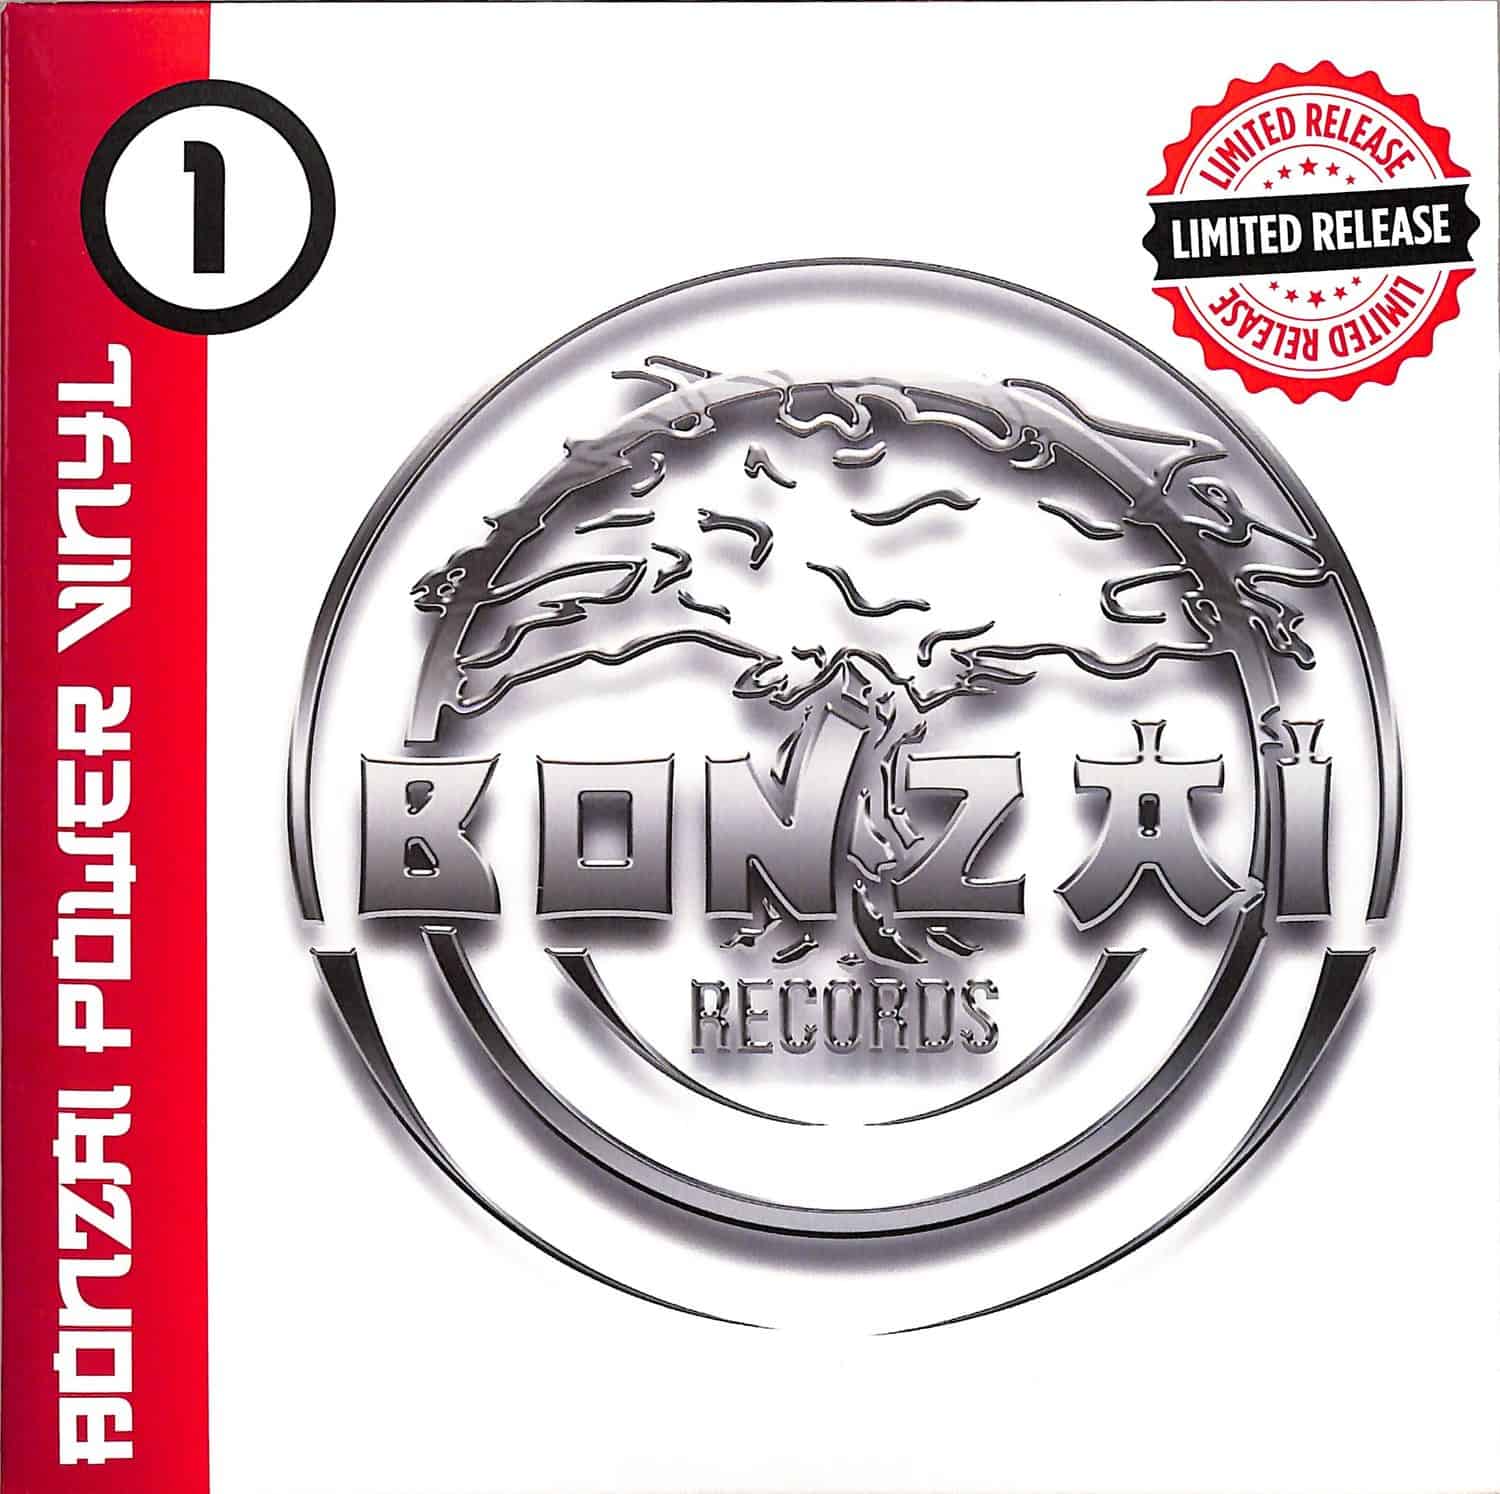 Bonzai Records VV - BONZAI POWER VINYL 1 